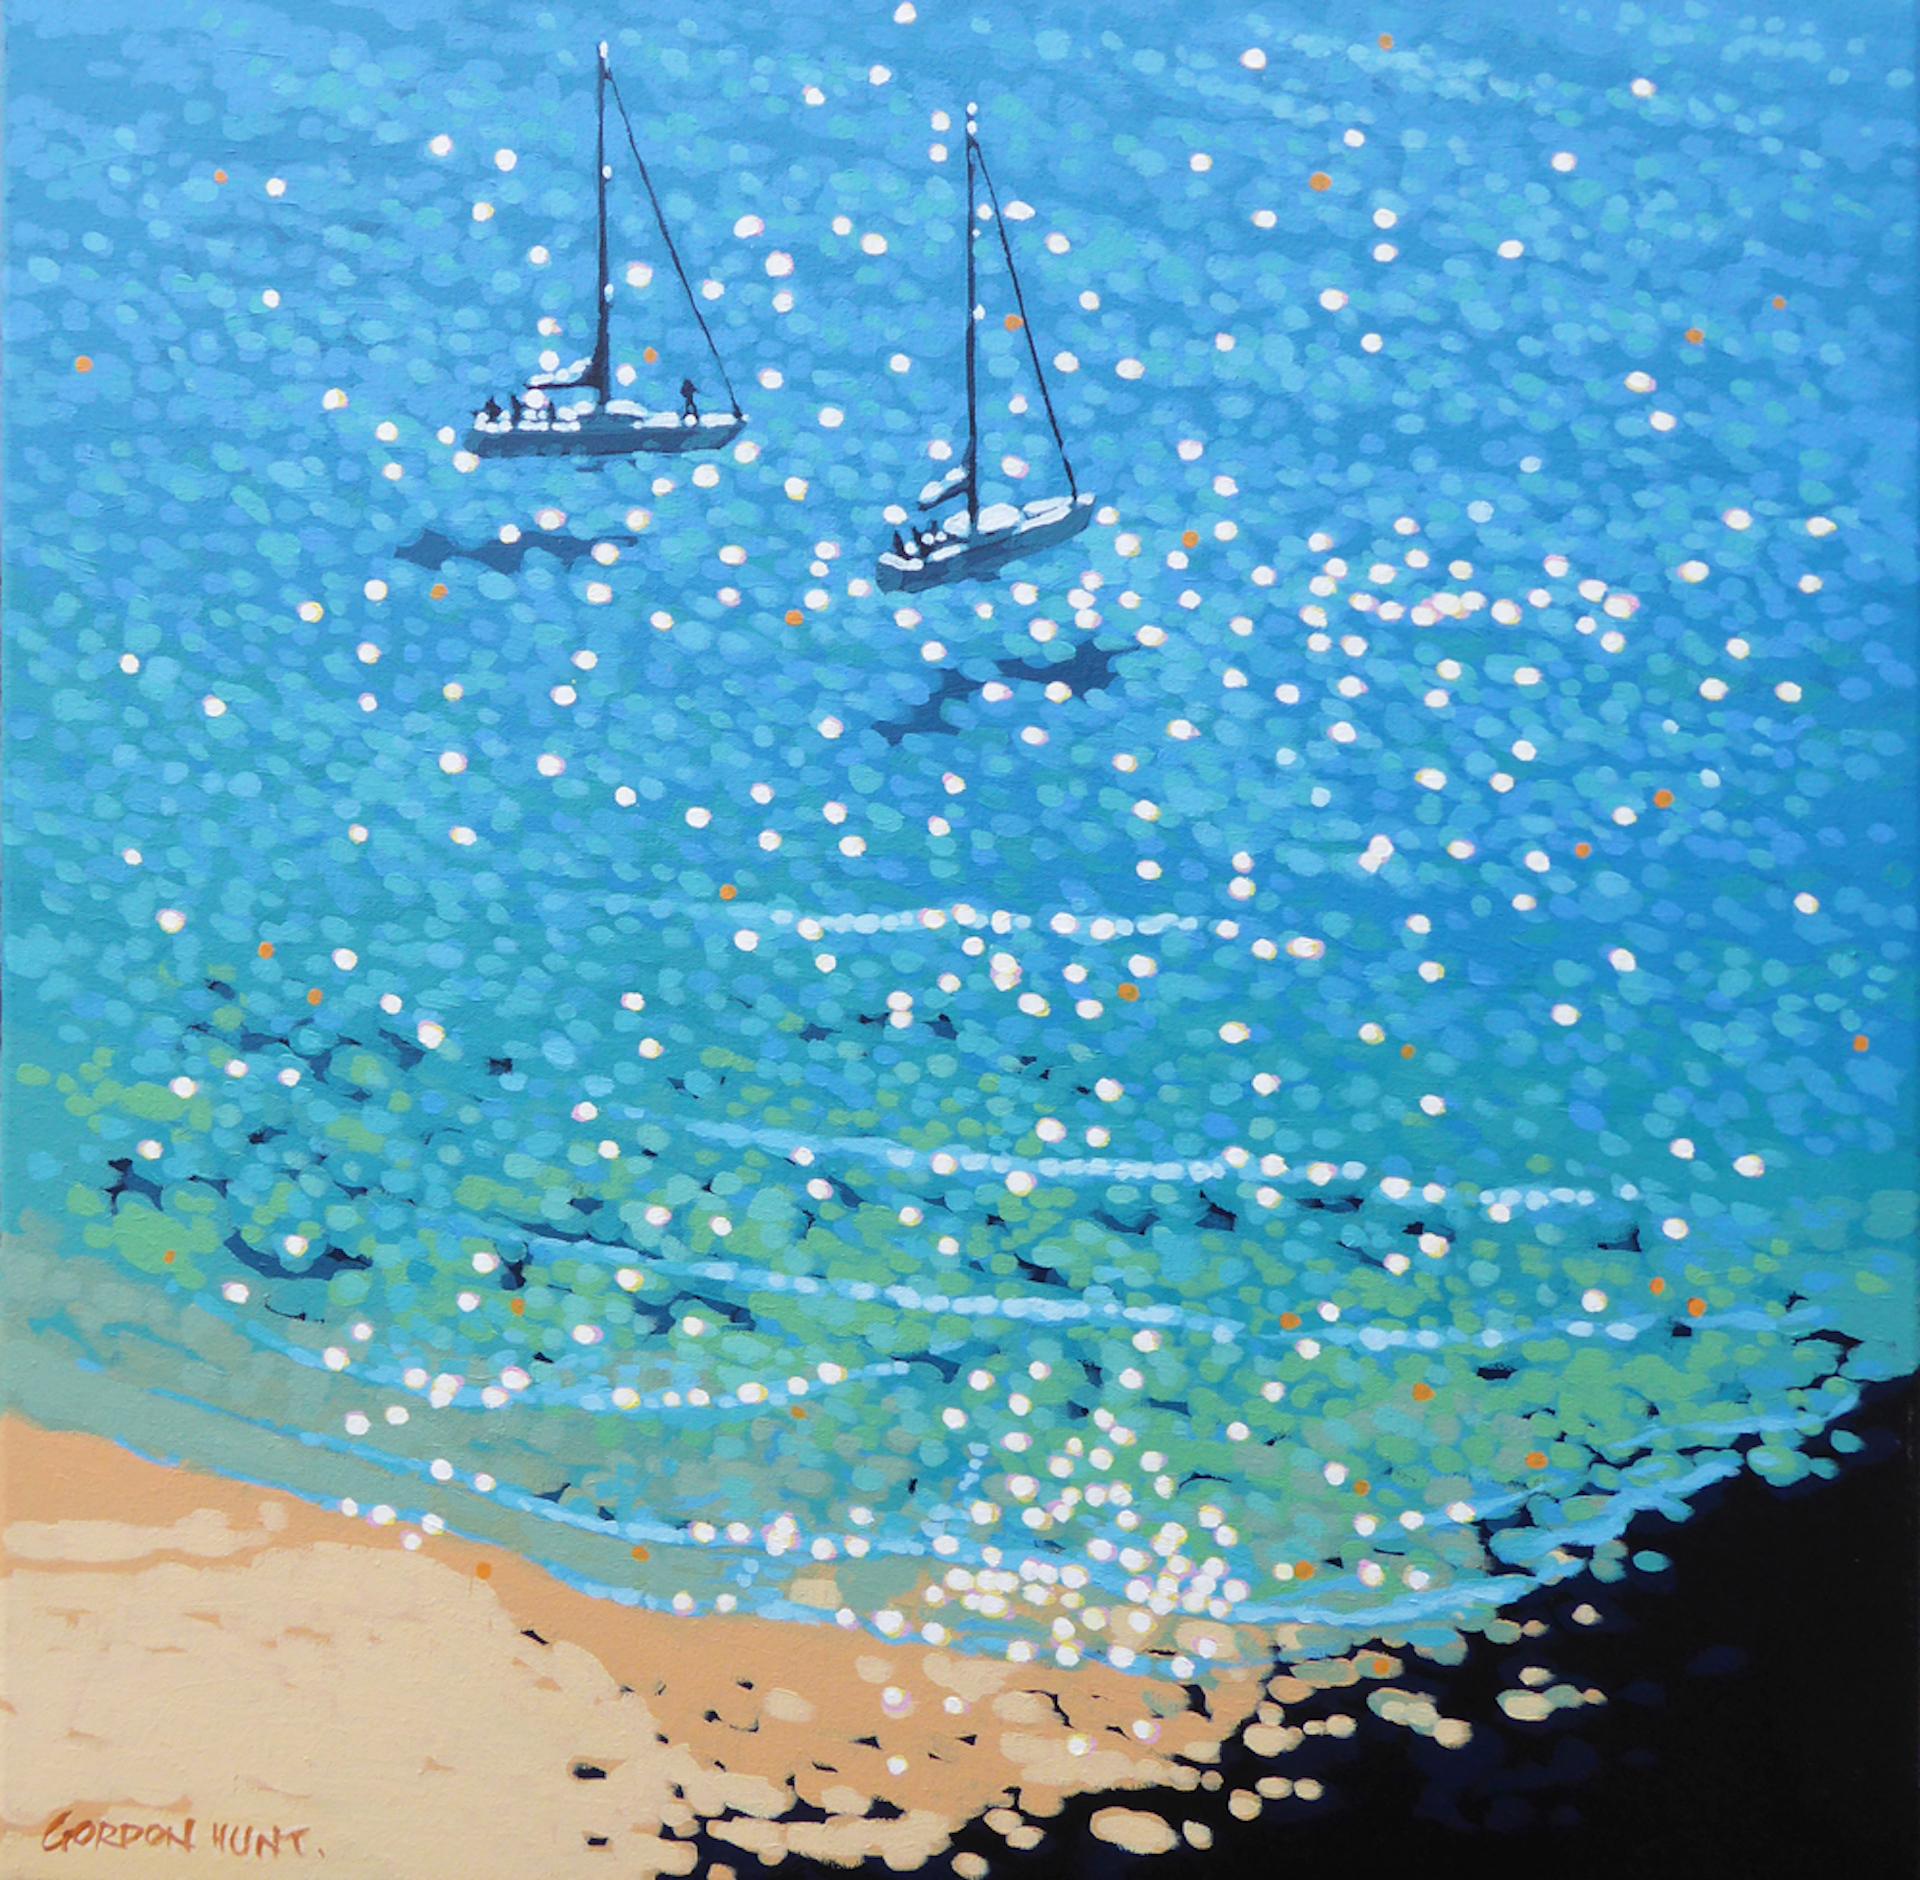 Gordon Hunt, Anchored Up, Seascape Print, Contemporary Impressionist Art